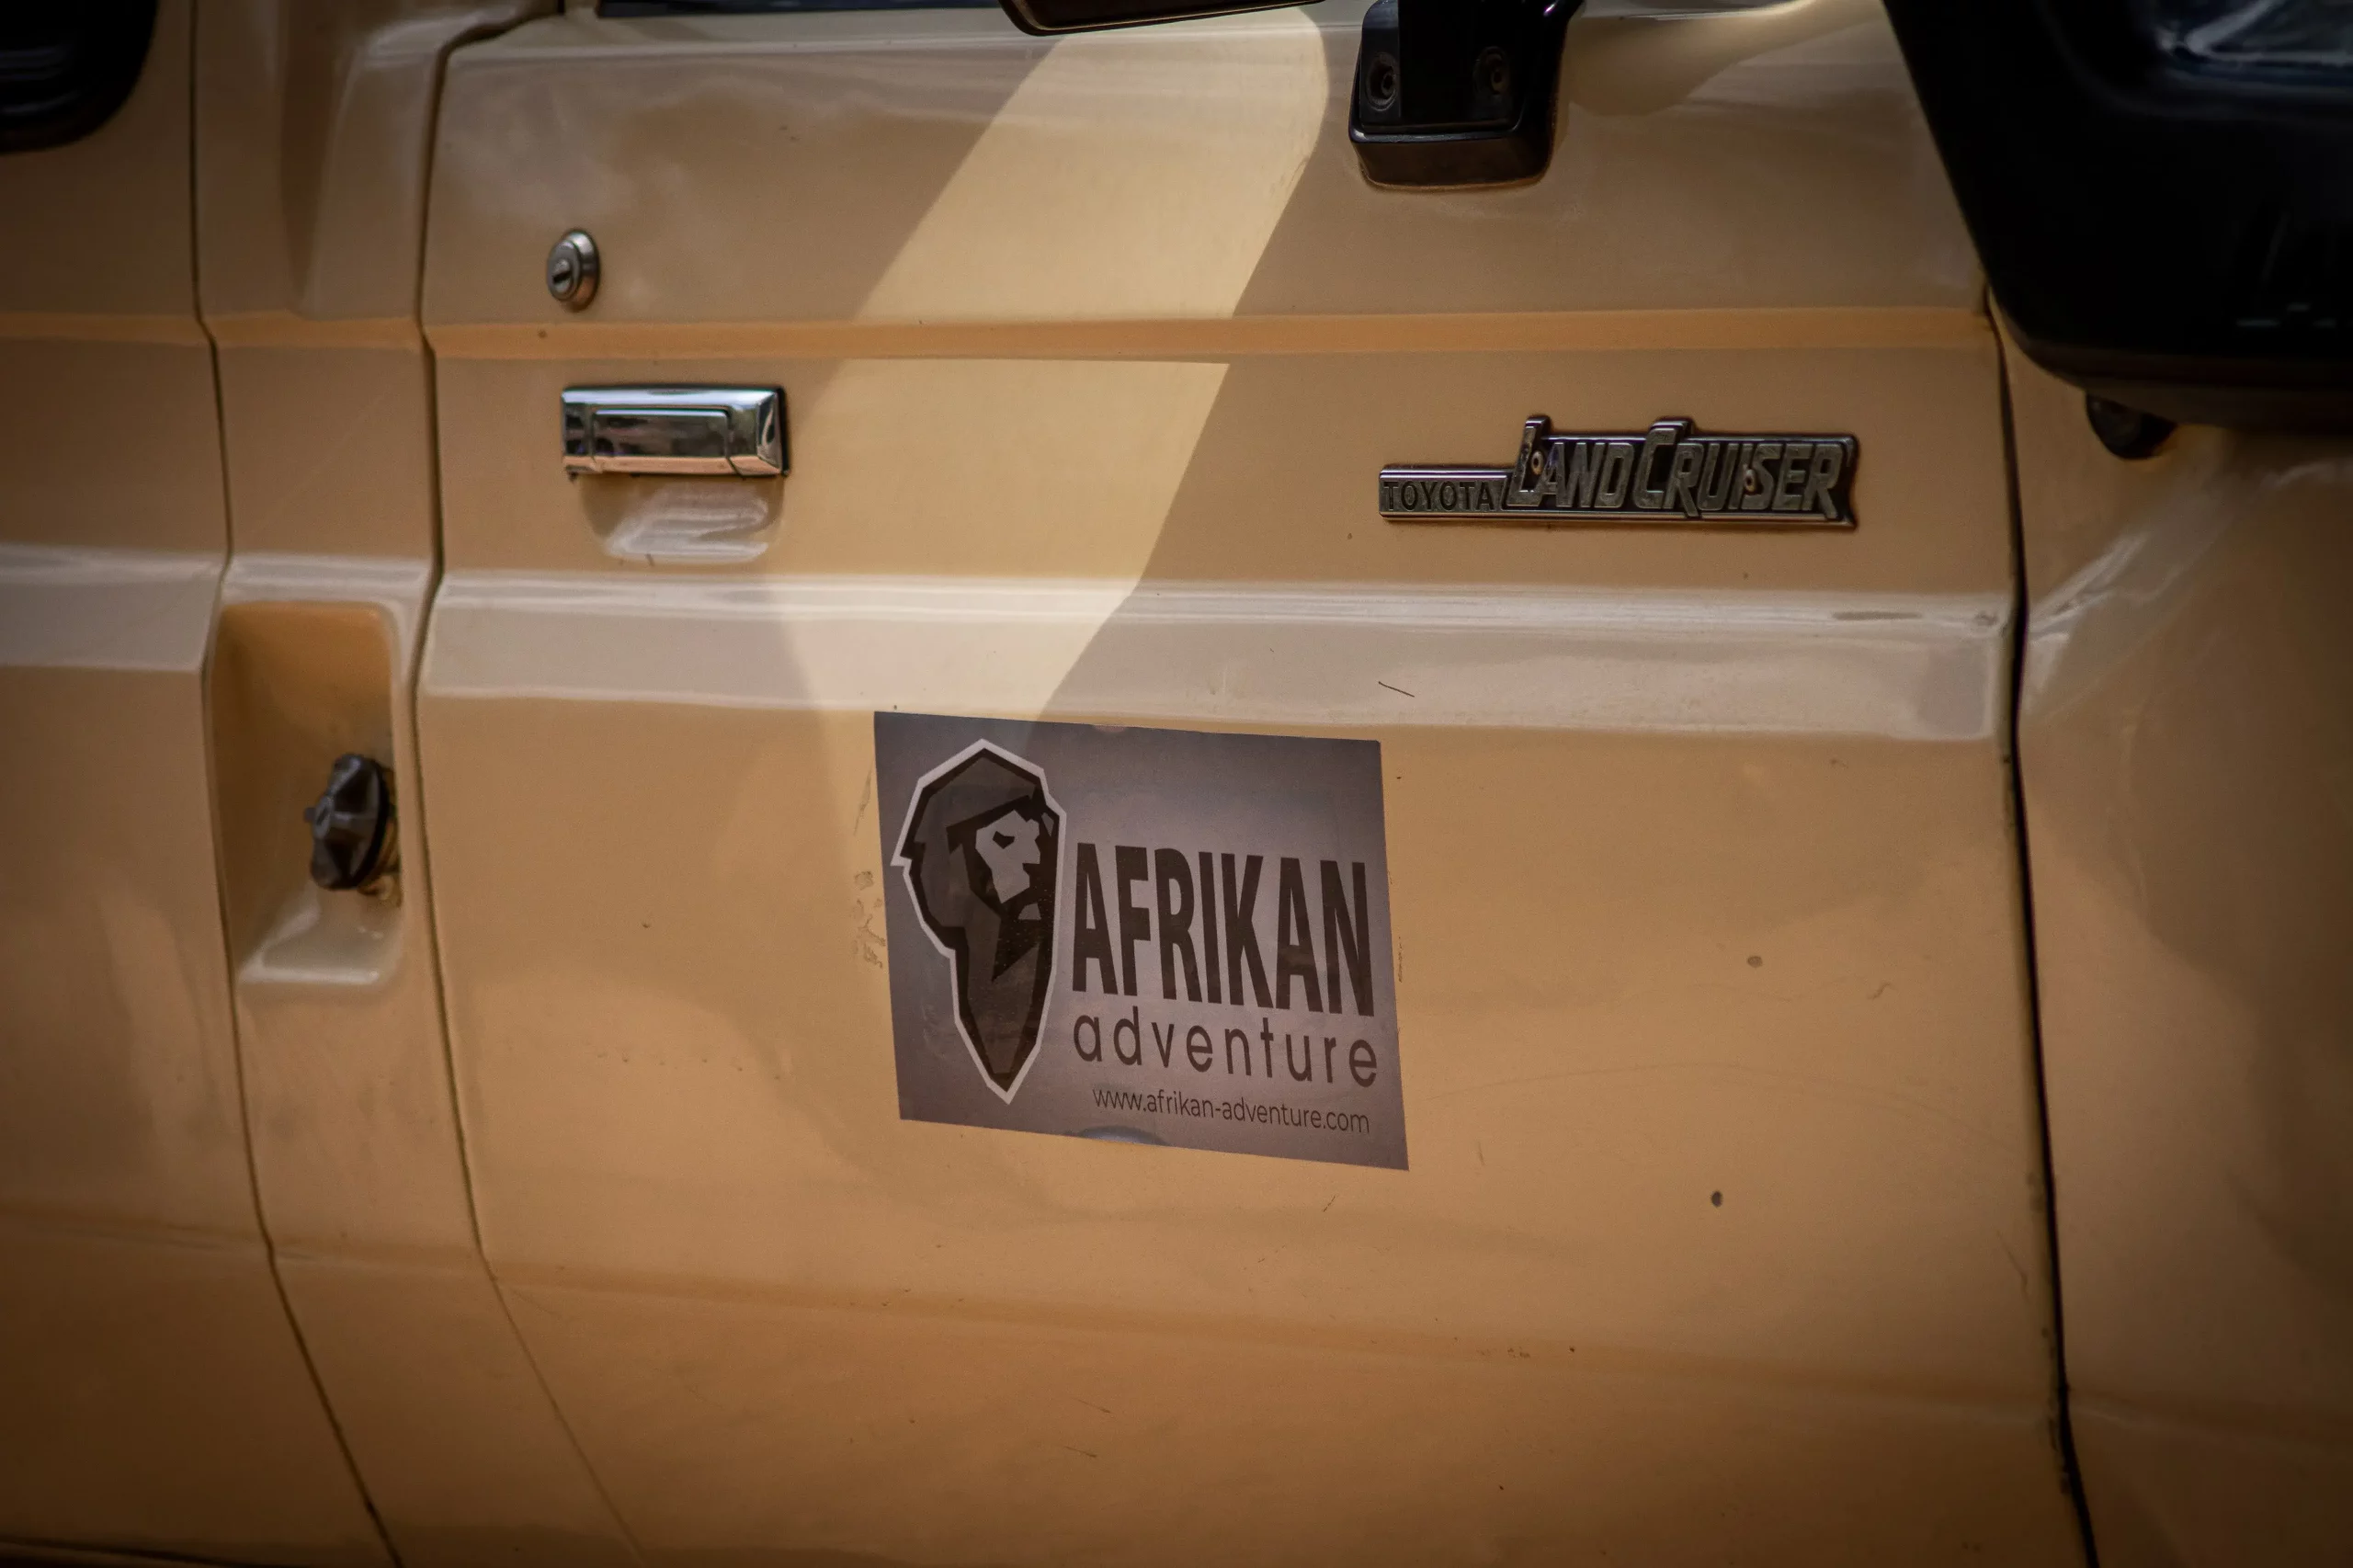 Afrikan Adventure's safari vehicle